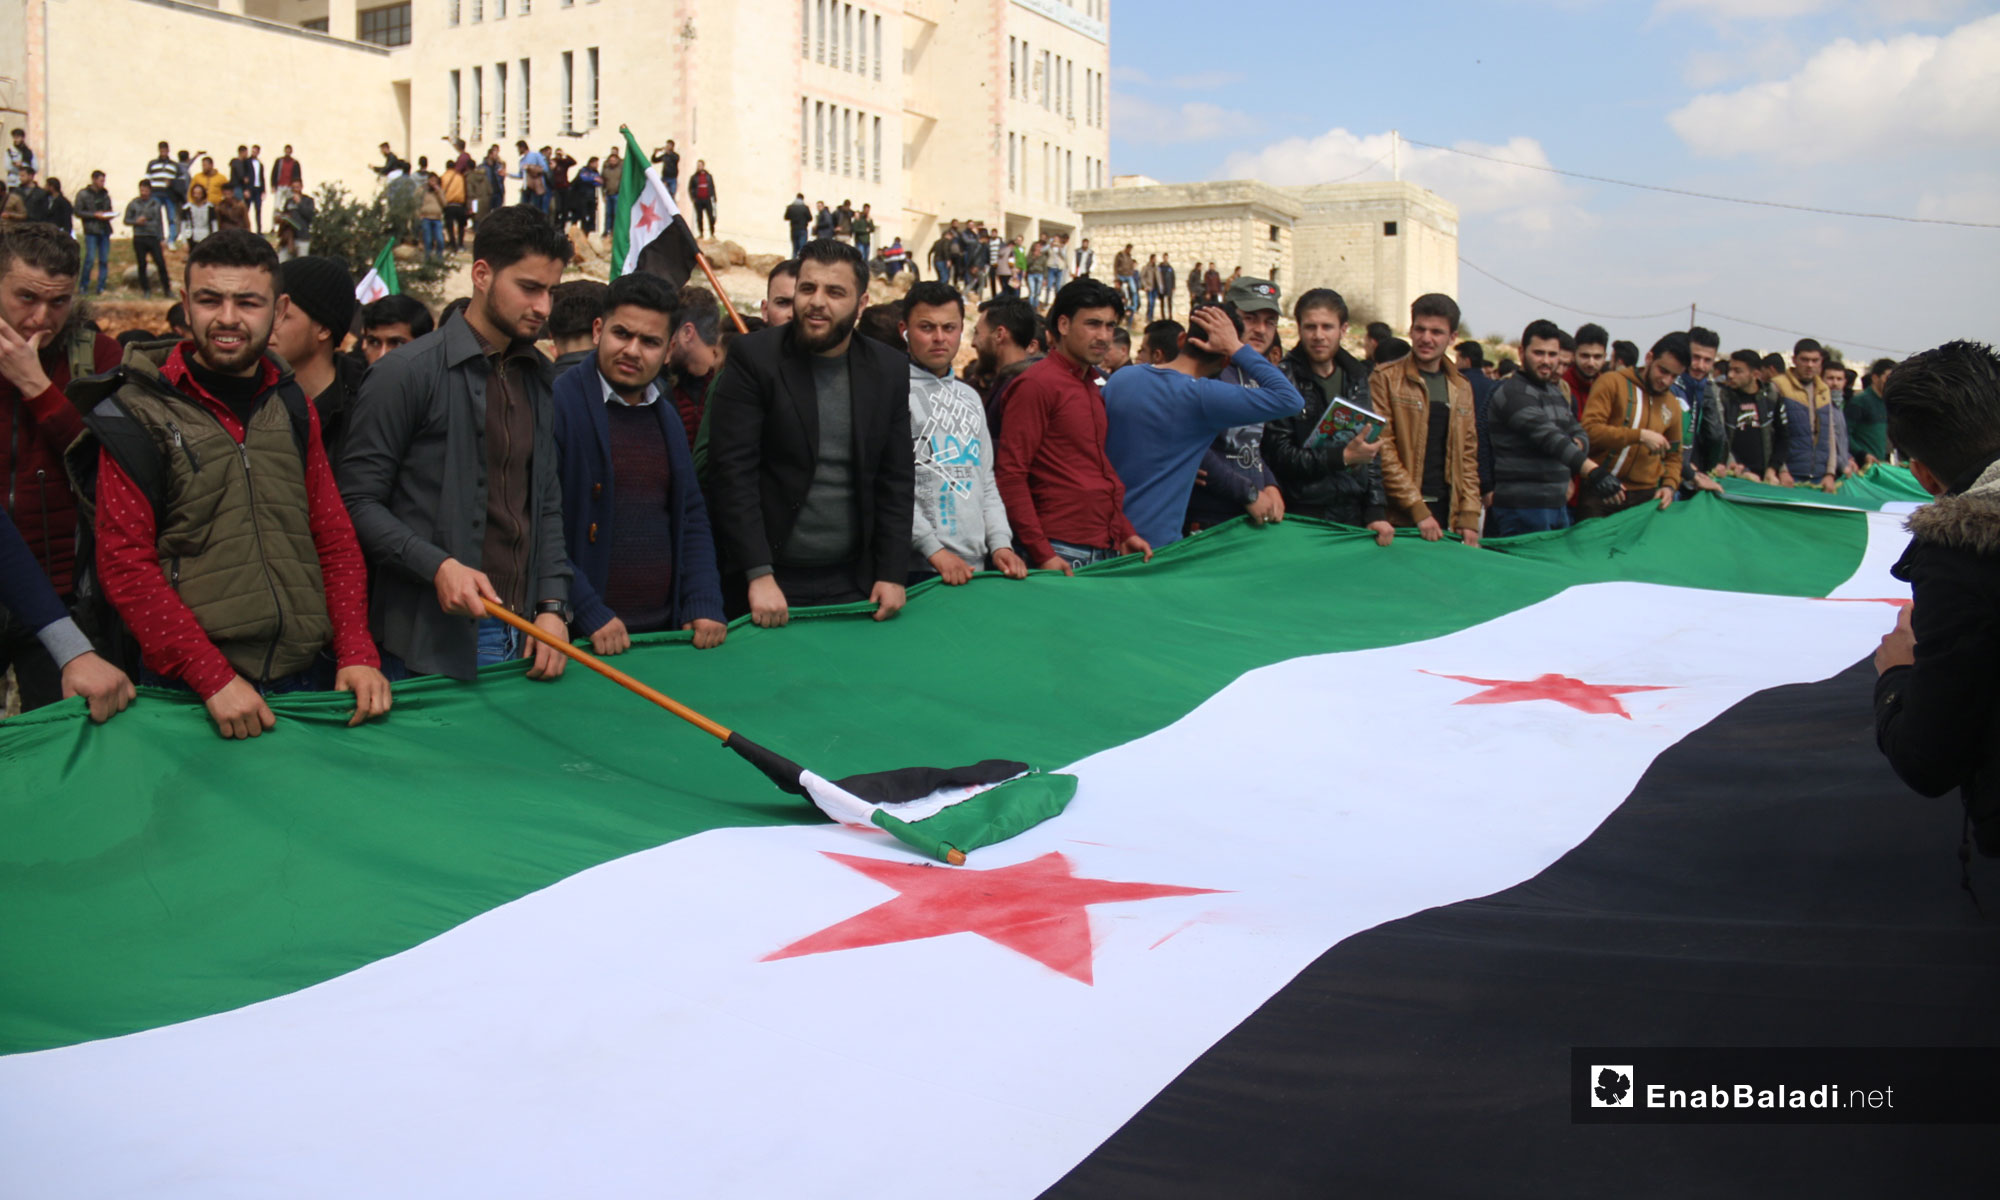 A demonstration by Idlib University students on the Syrian revolution’s eighth anniversary – March 18, 2019 (Enab Baladi)